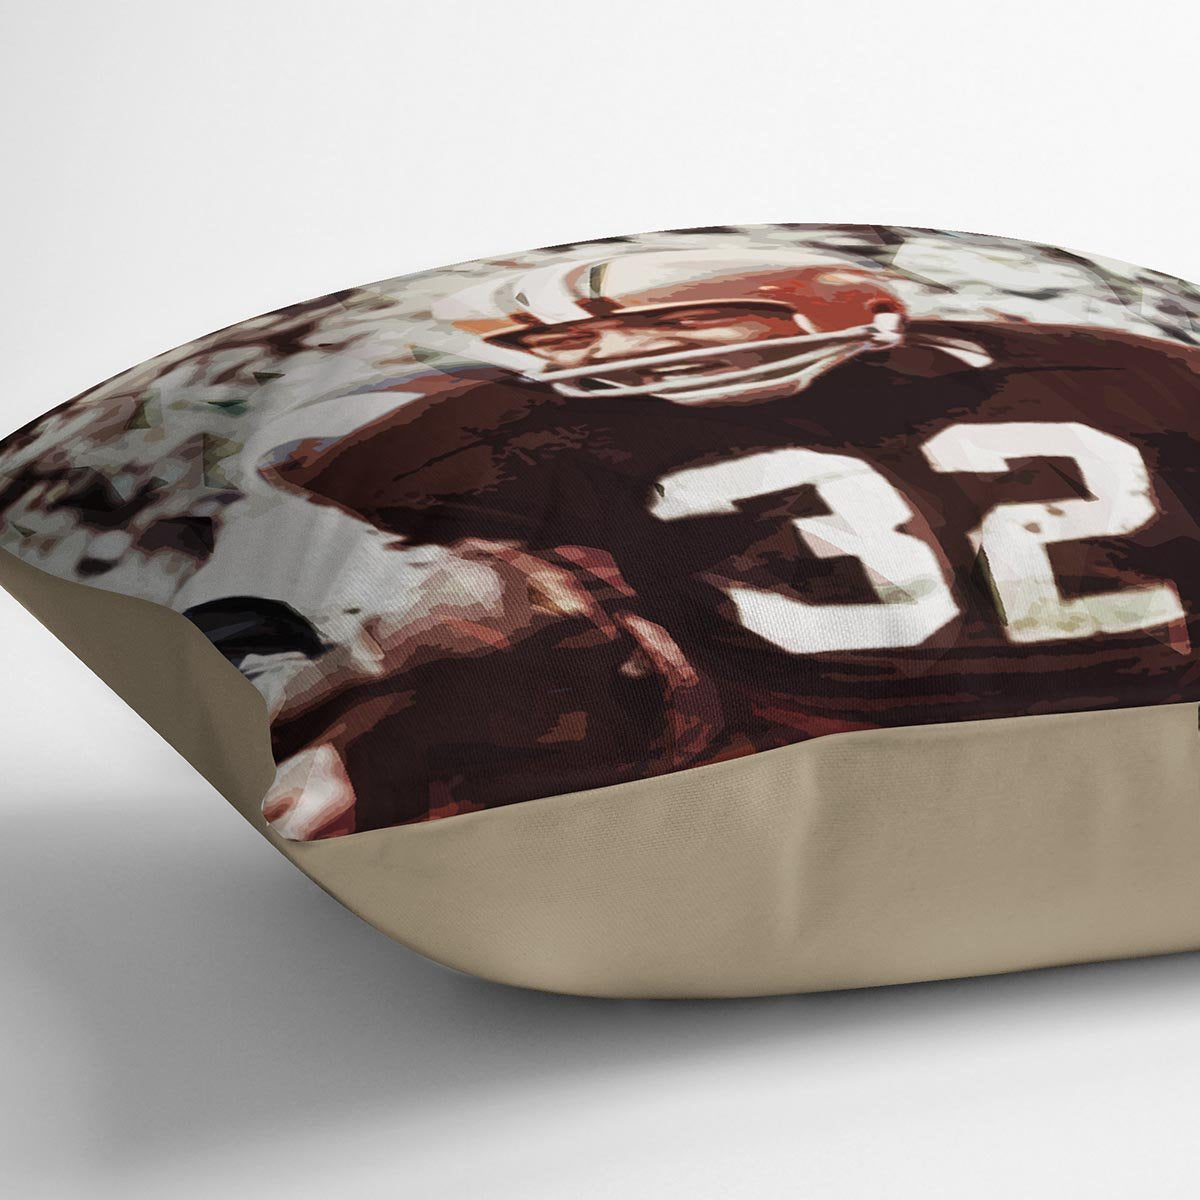 Jim Brown Cleveland Browns Cushion